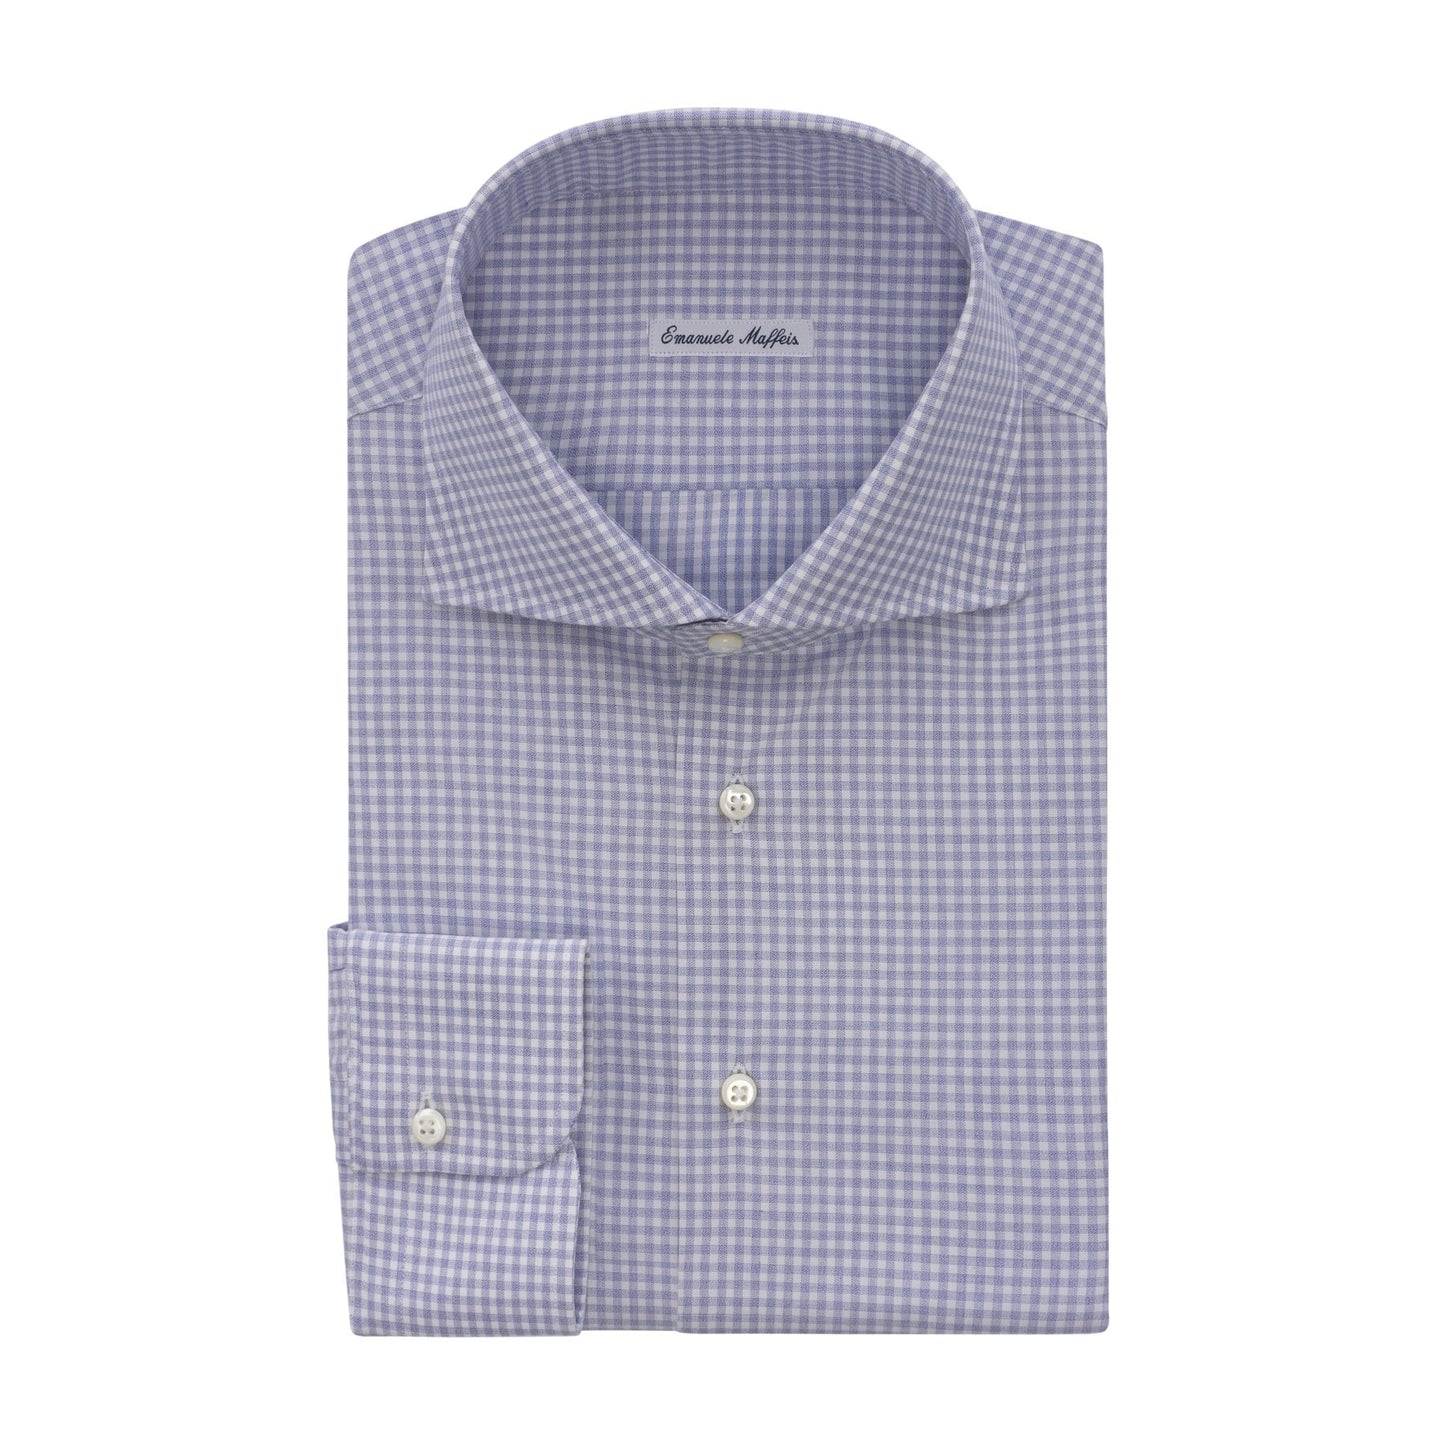 Emanuele Maffeis Checked Cotton Light Blue Shirt with Cutaway Collar - SARTALE